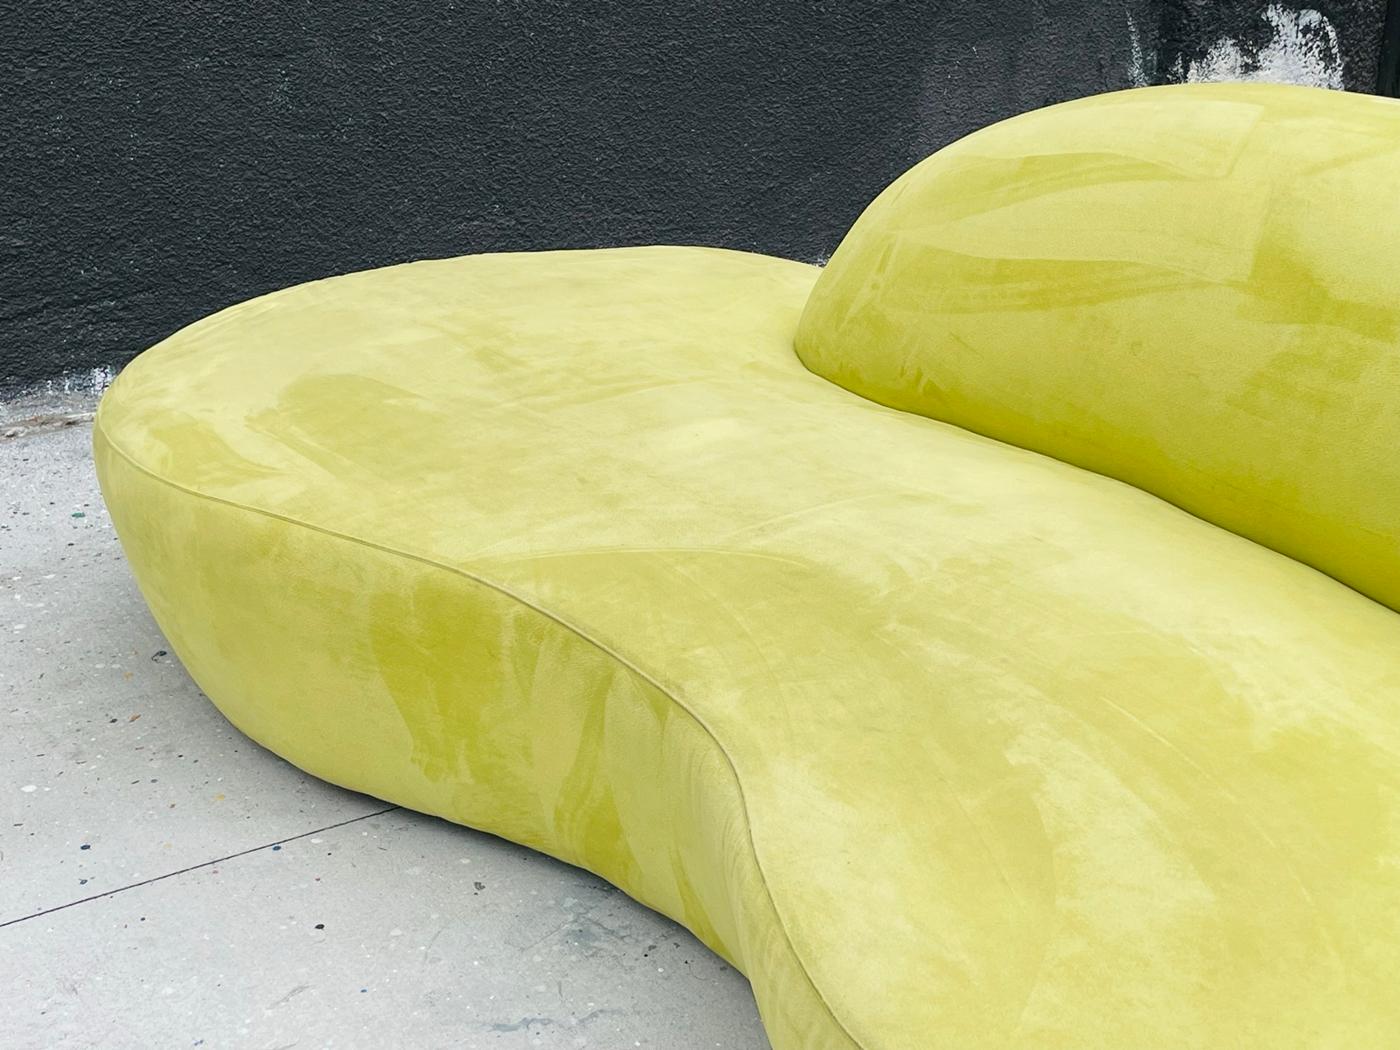 Textile Serpentine Sofa in the Style of Vladimir Kagan